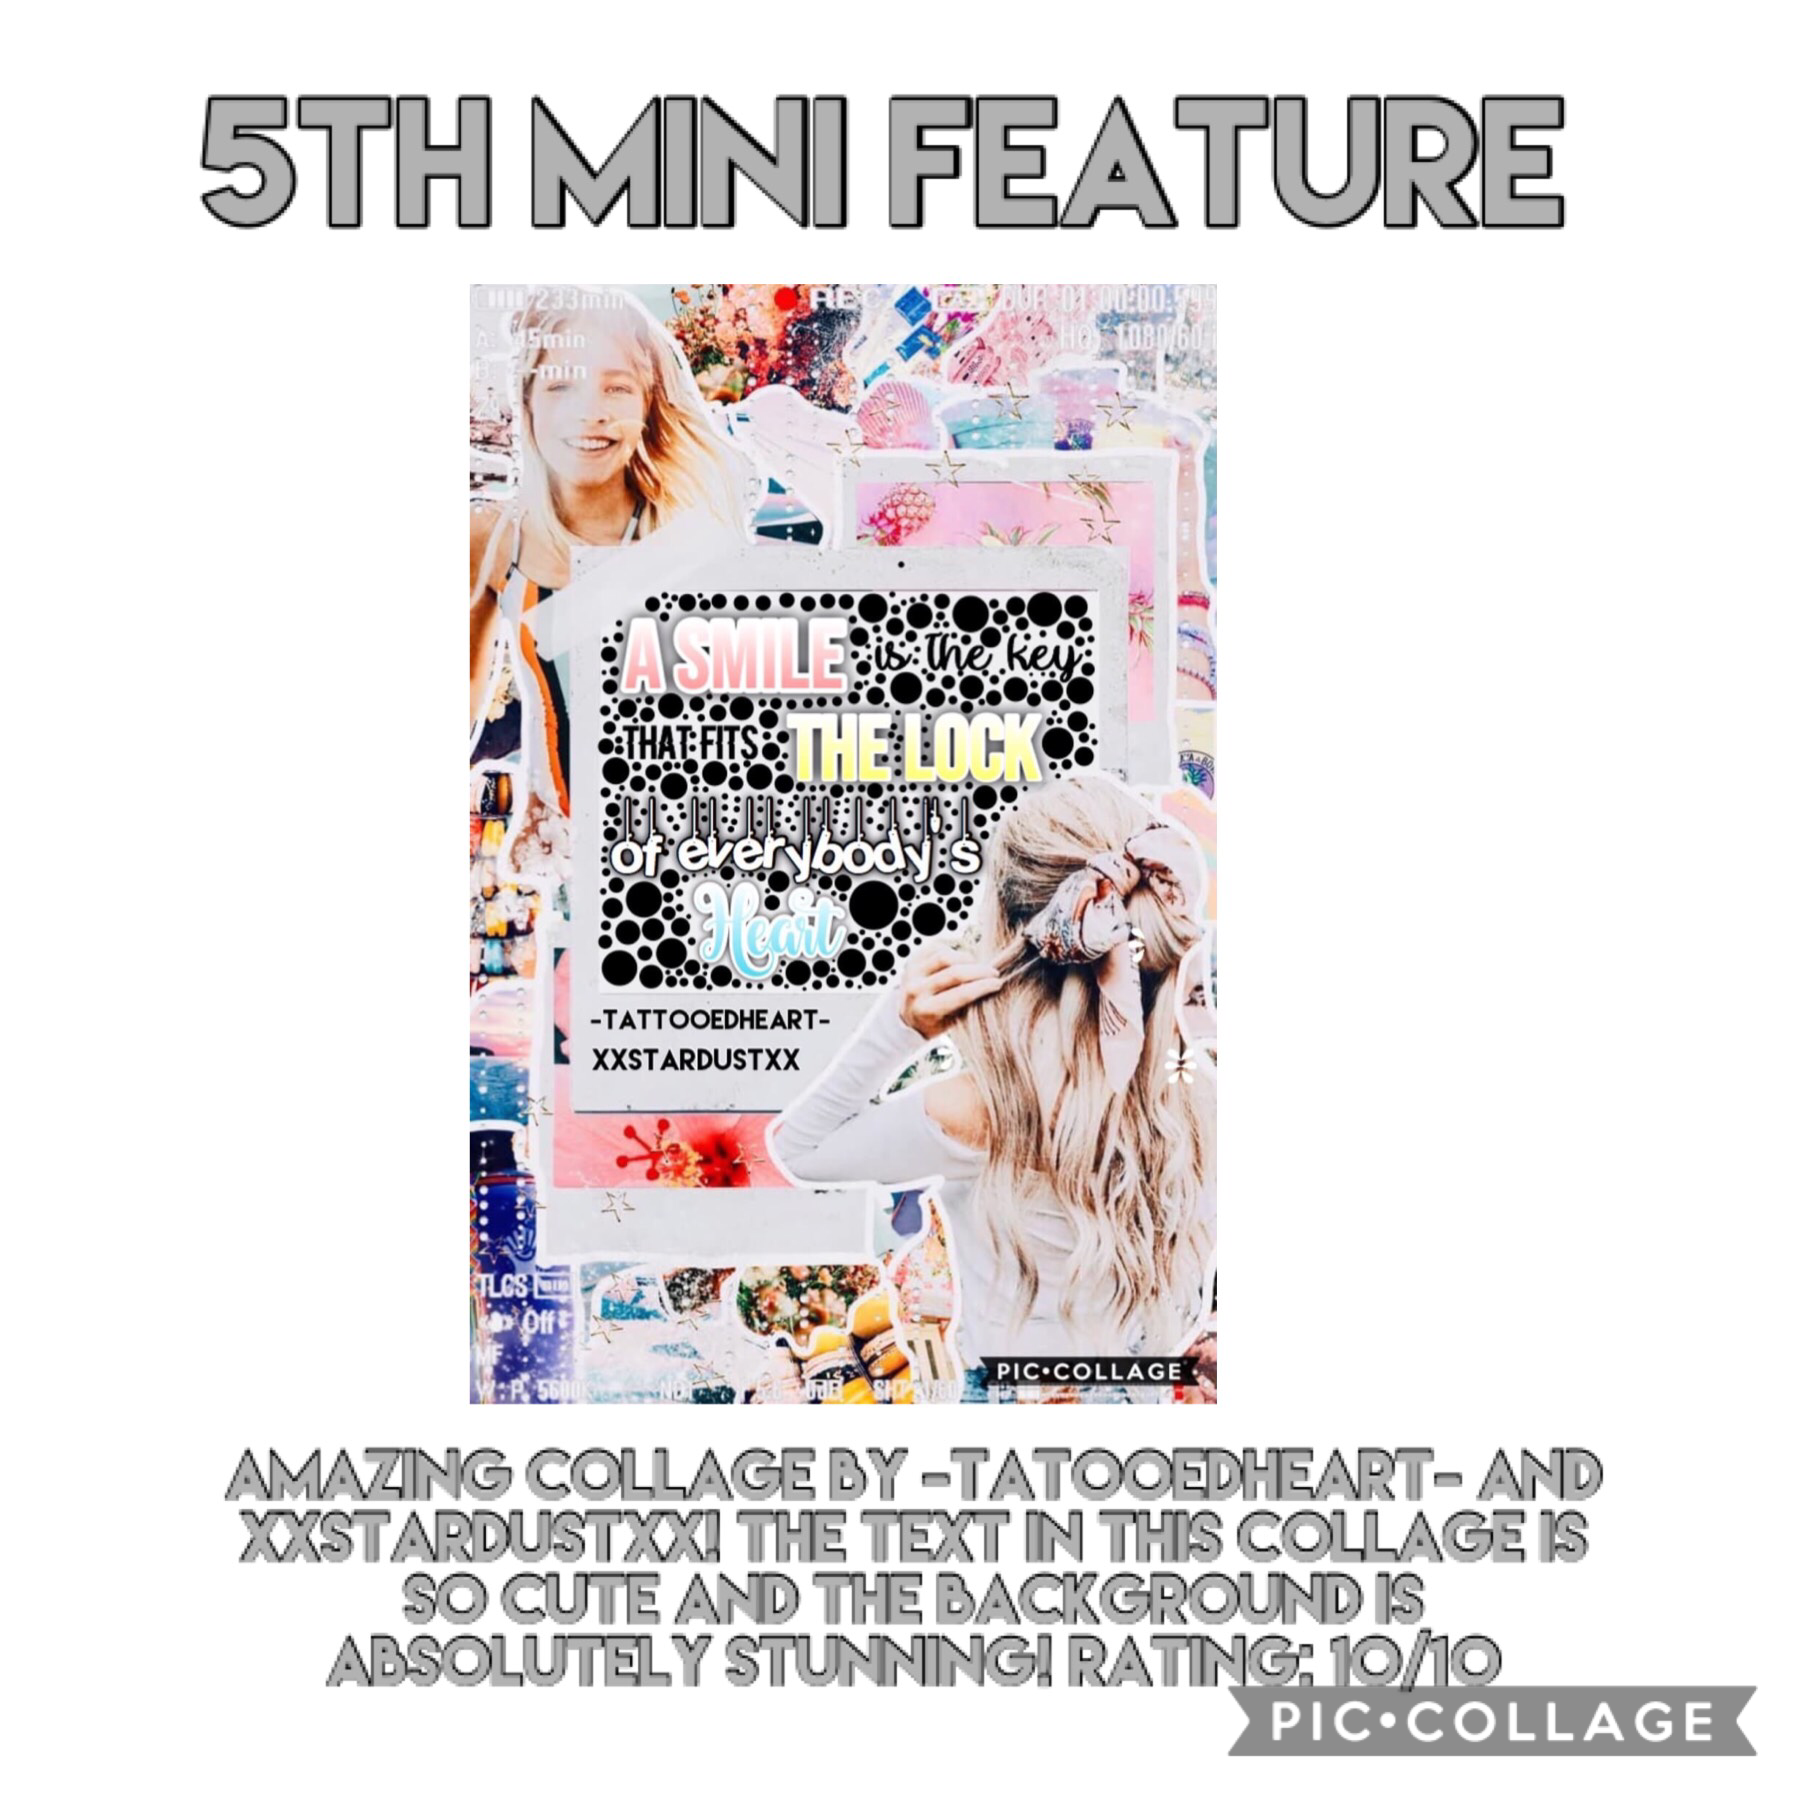 5th mini feature credit to...
-TatooedHeart- and XxStarDustxX